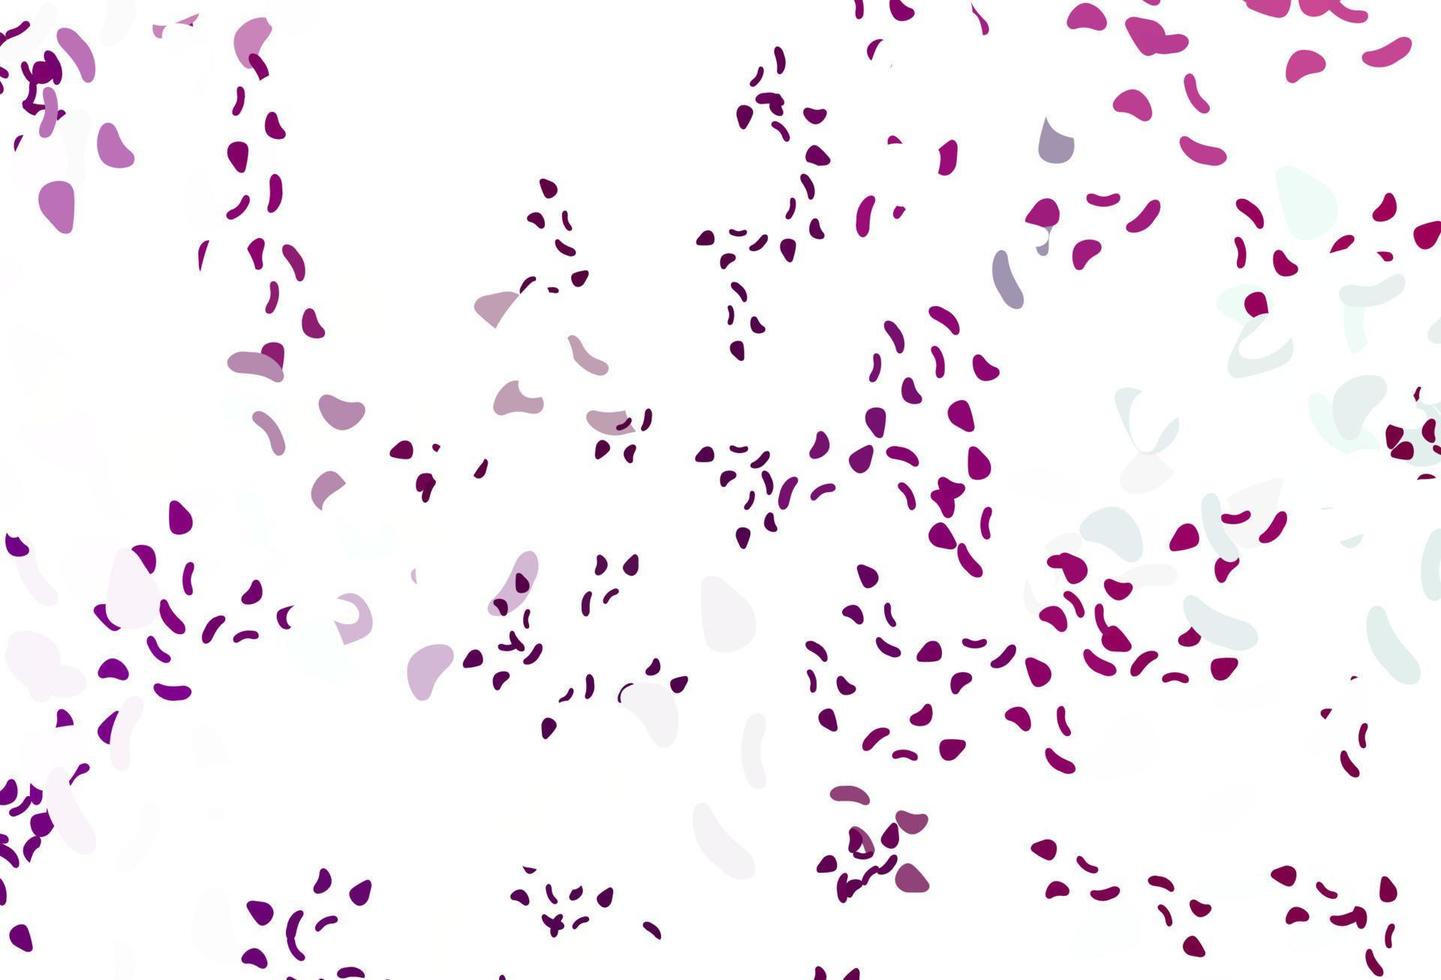 Light purple vector texture with random forms.